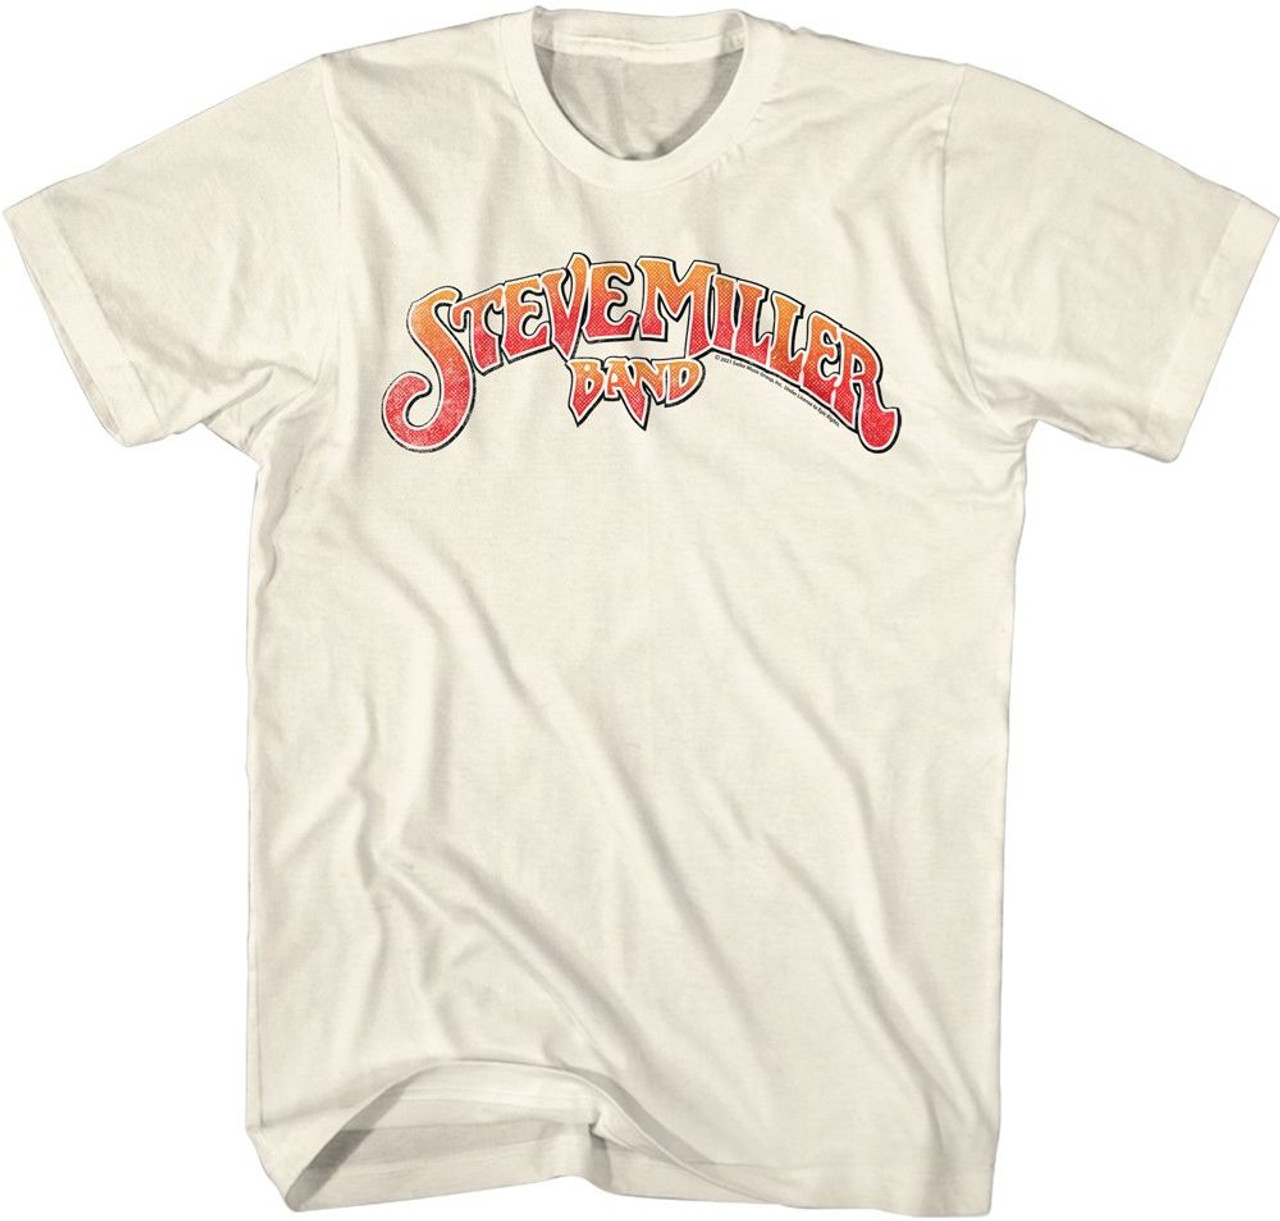 Steve Miller Band Vintage T-shirt - Logo | Men's Unisex Beige Shirt Rocker